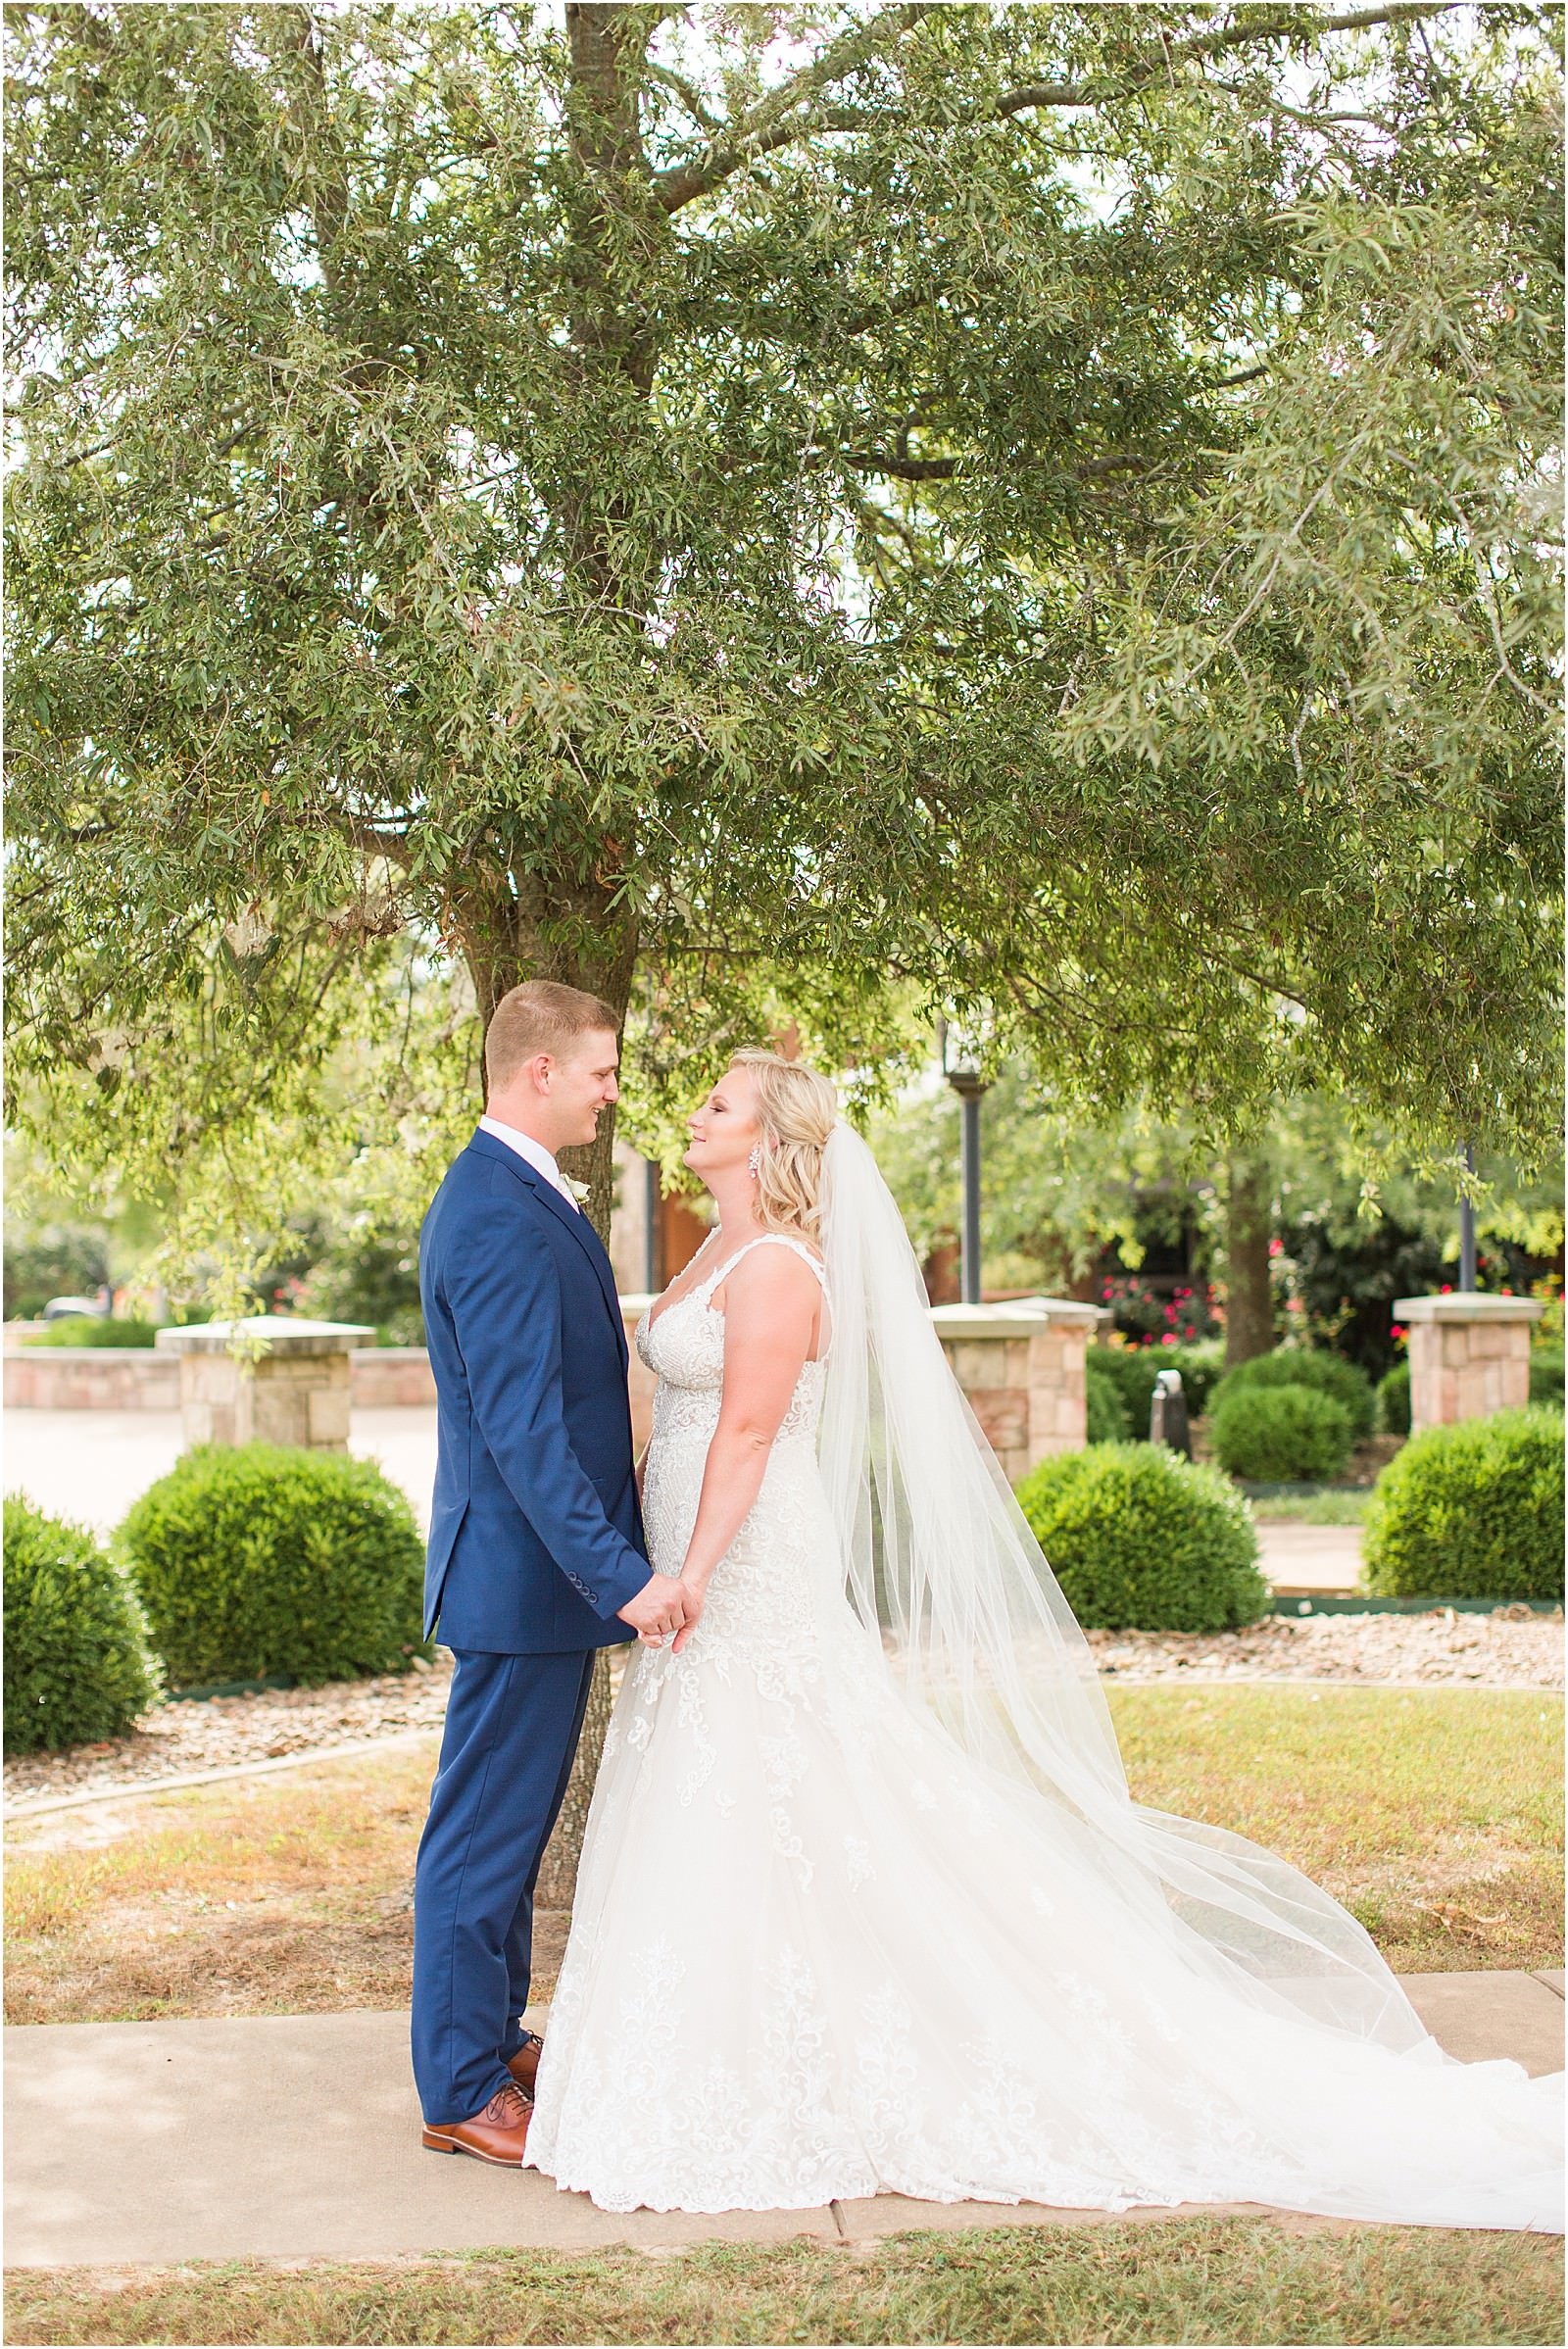 Kelsey and Caleb | Walkers Bluff Winery Wedding | Bret and Brandie Photography036.jpg